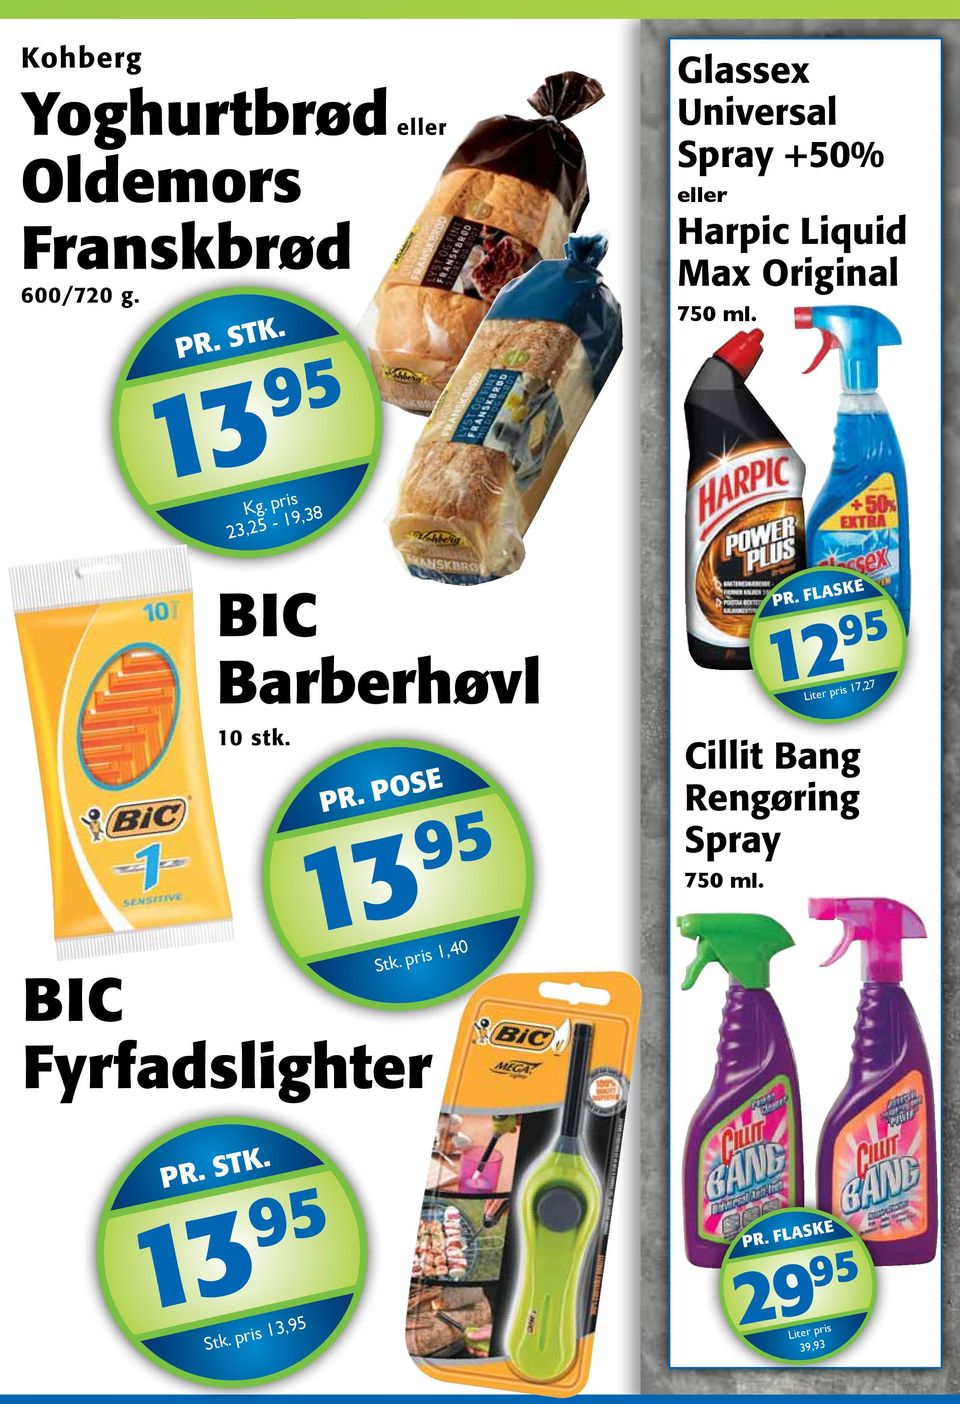 pris 1,40 BIC Fyrfadslighter Glassex Universal Spray +50% eller Harpic Liquid